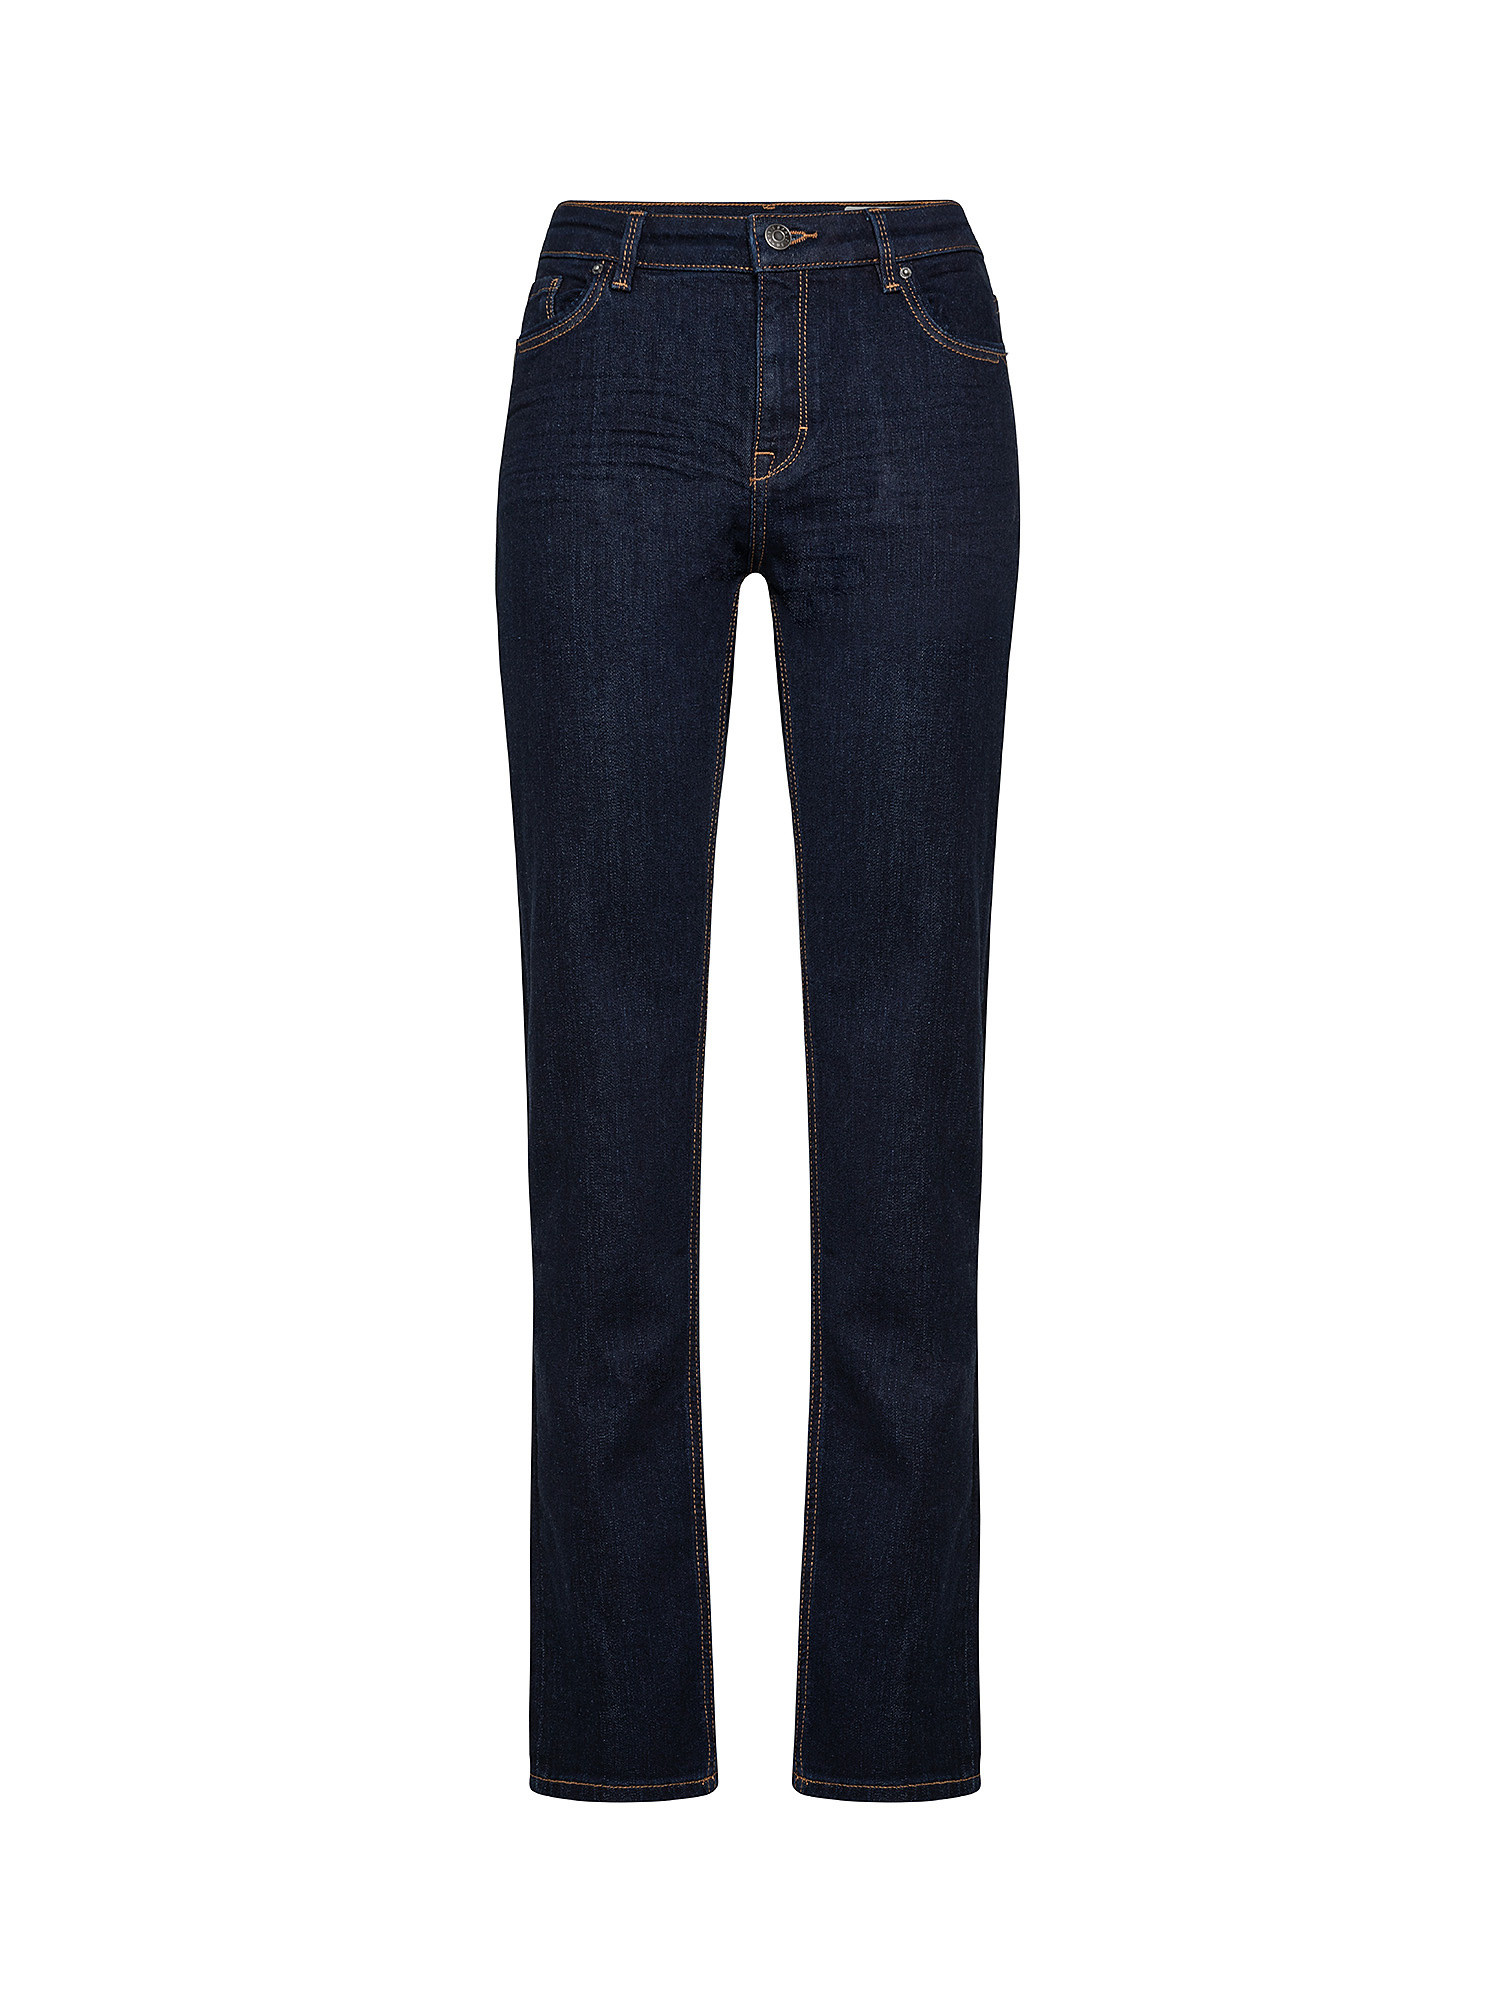 Jeans super stretch con cotone biologico, Denim, large image number 0